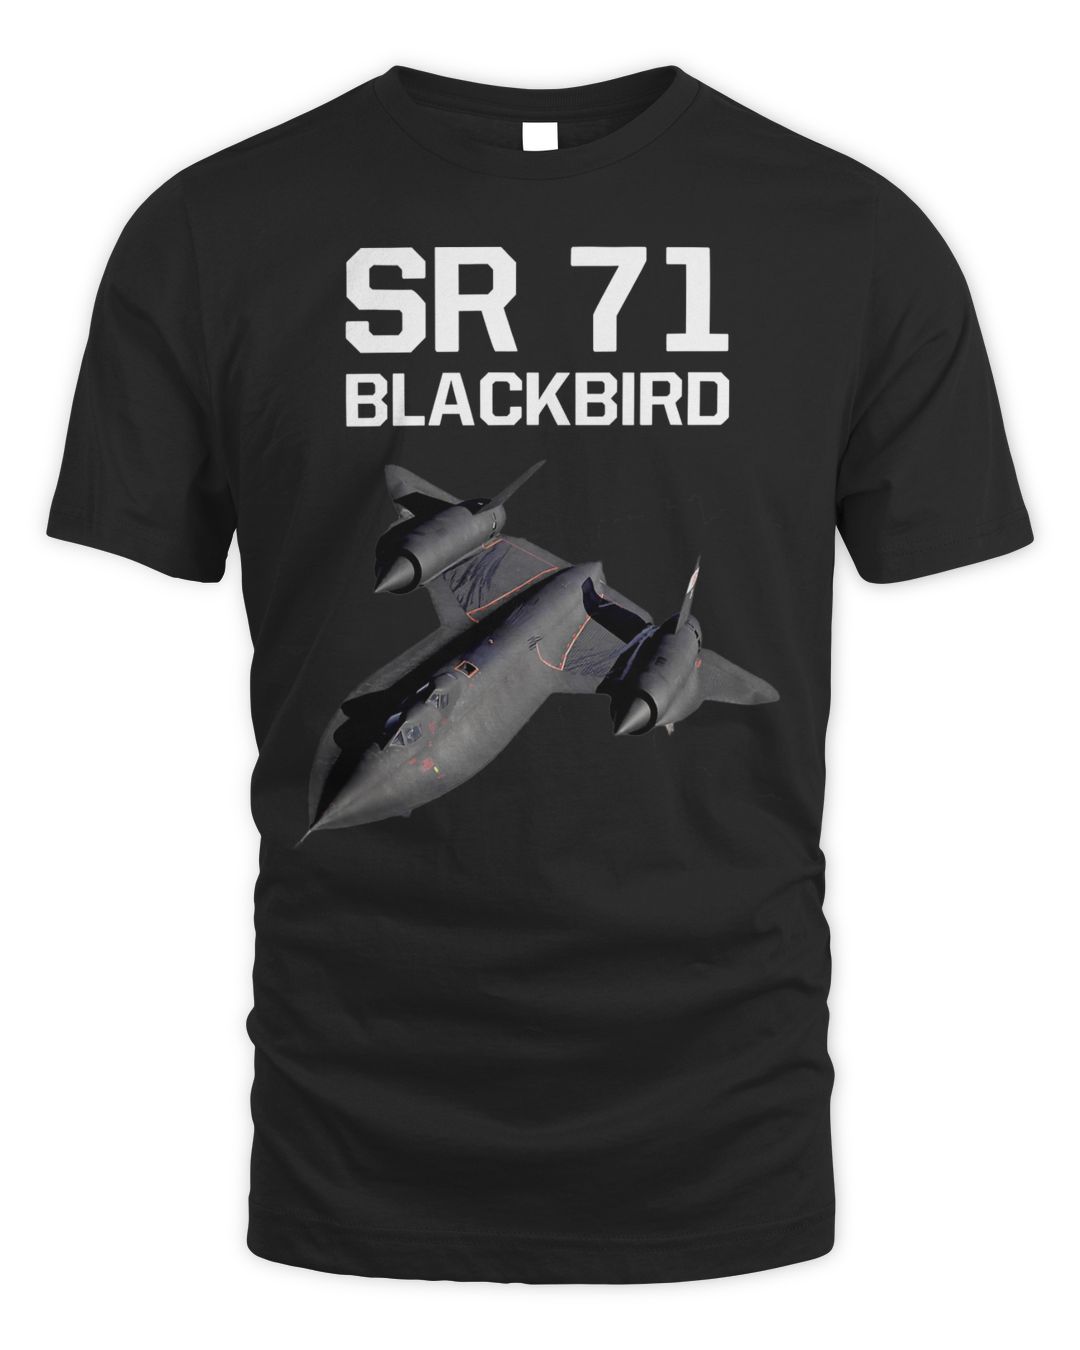 SR 71 Blackbird, Airplane Jet Shirt T-Shirt | SenPrints